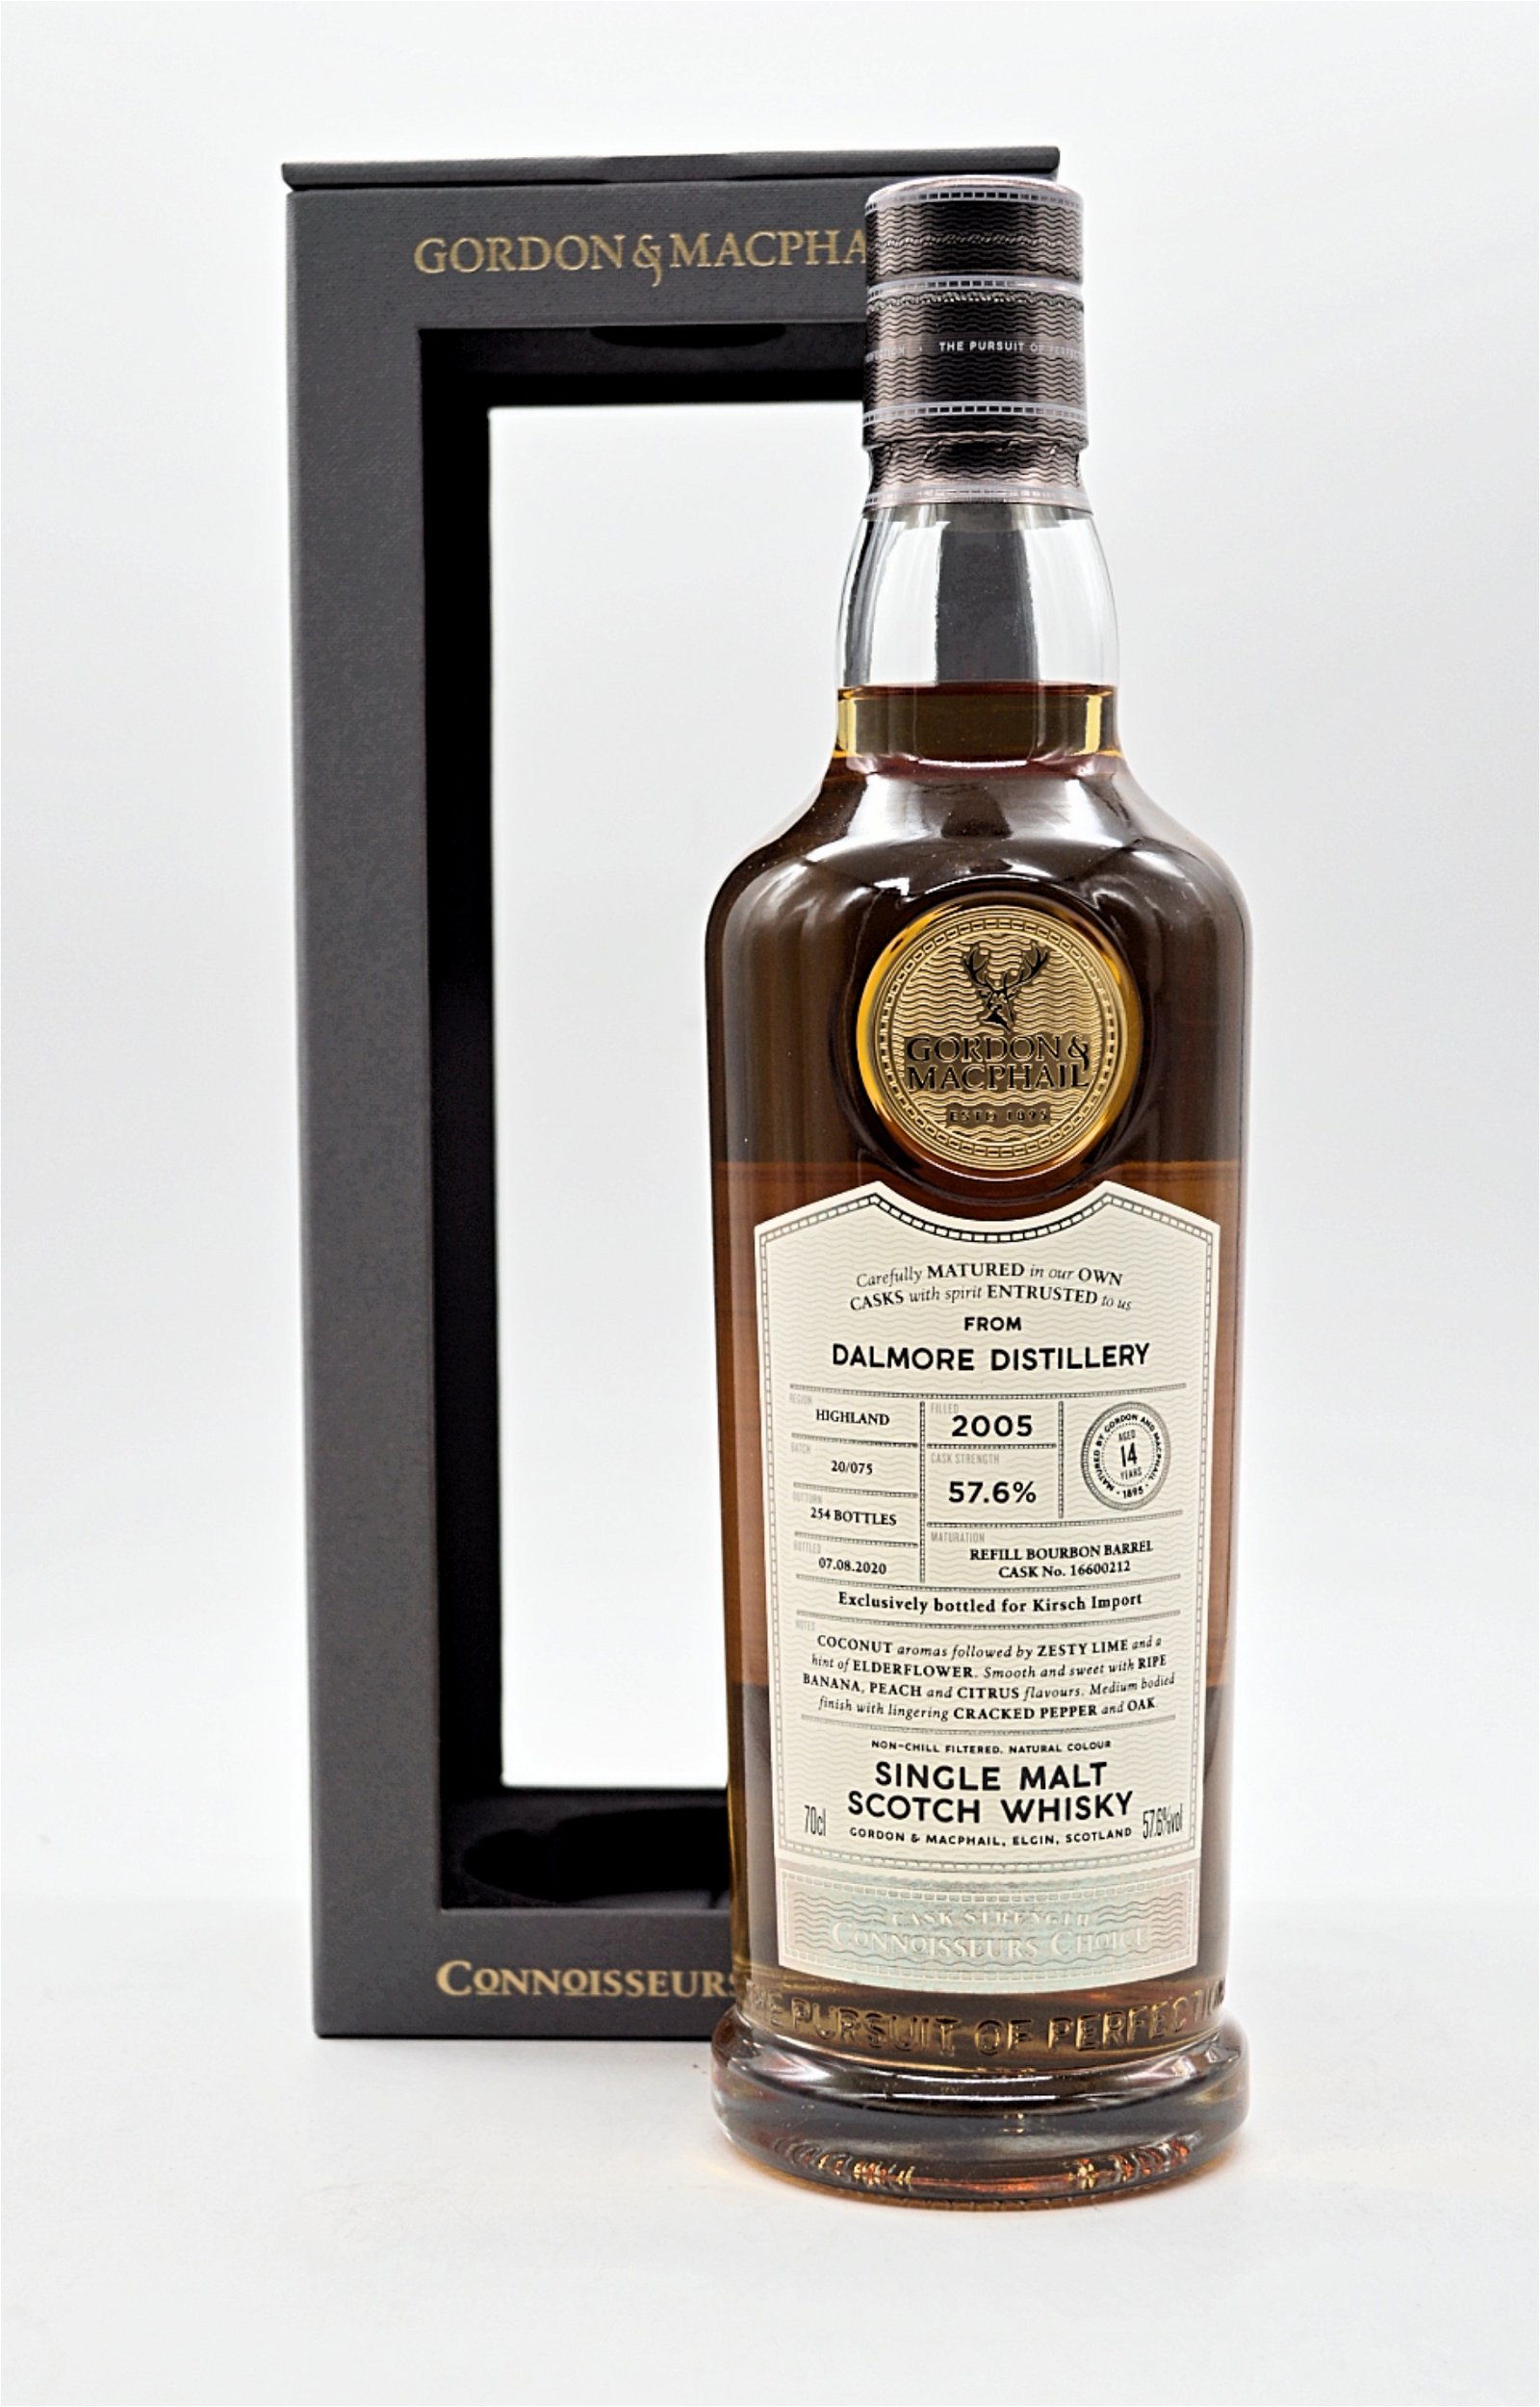 Gordon & Macphail Connoisseurs Choice Dalmore Distillery 2005/2020 Single Malt Scotch Whisky